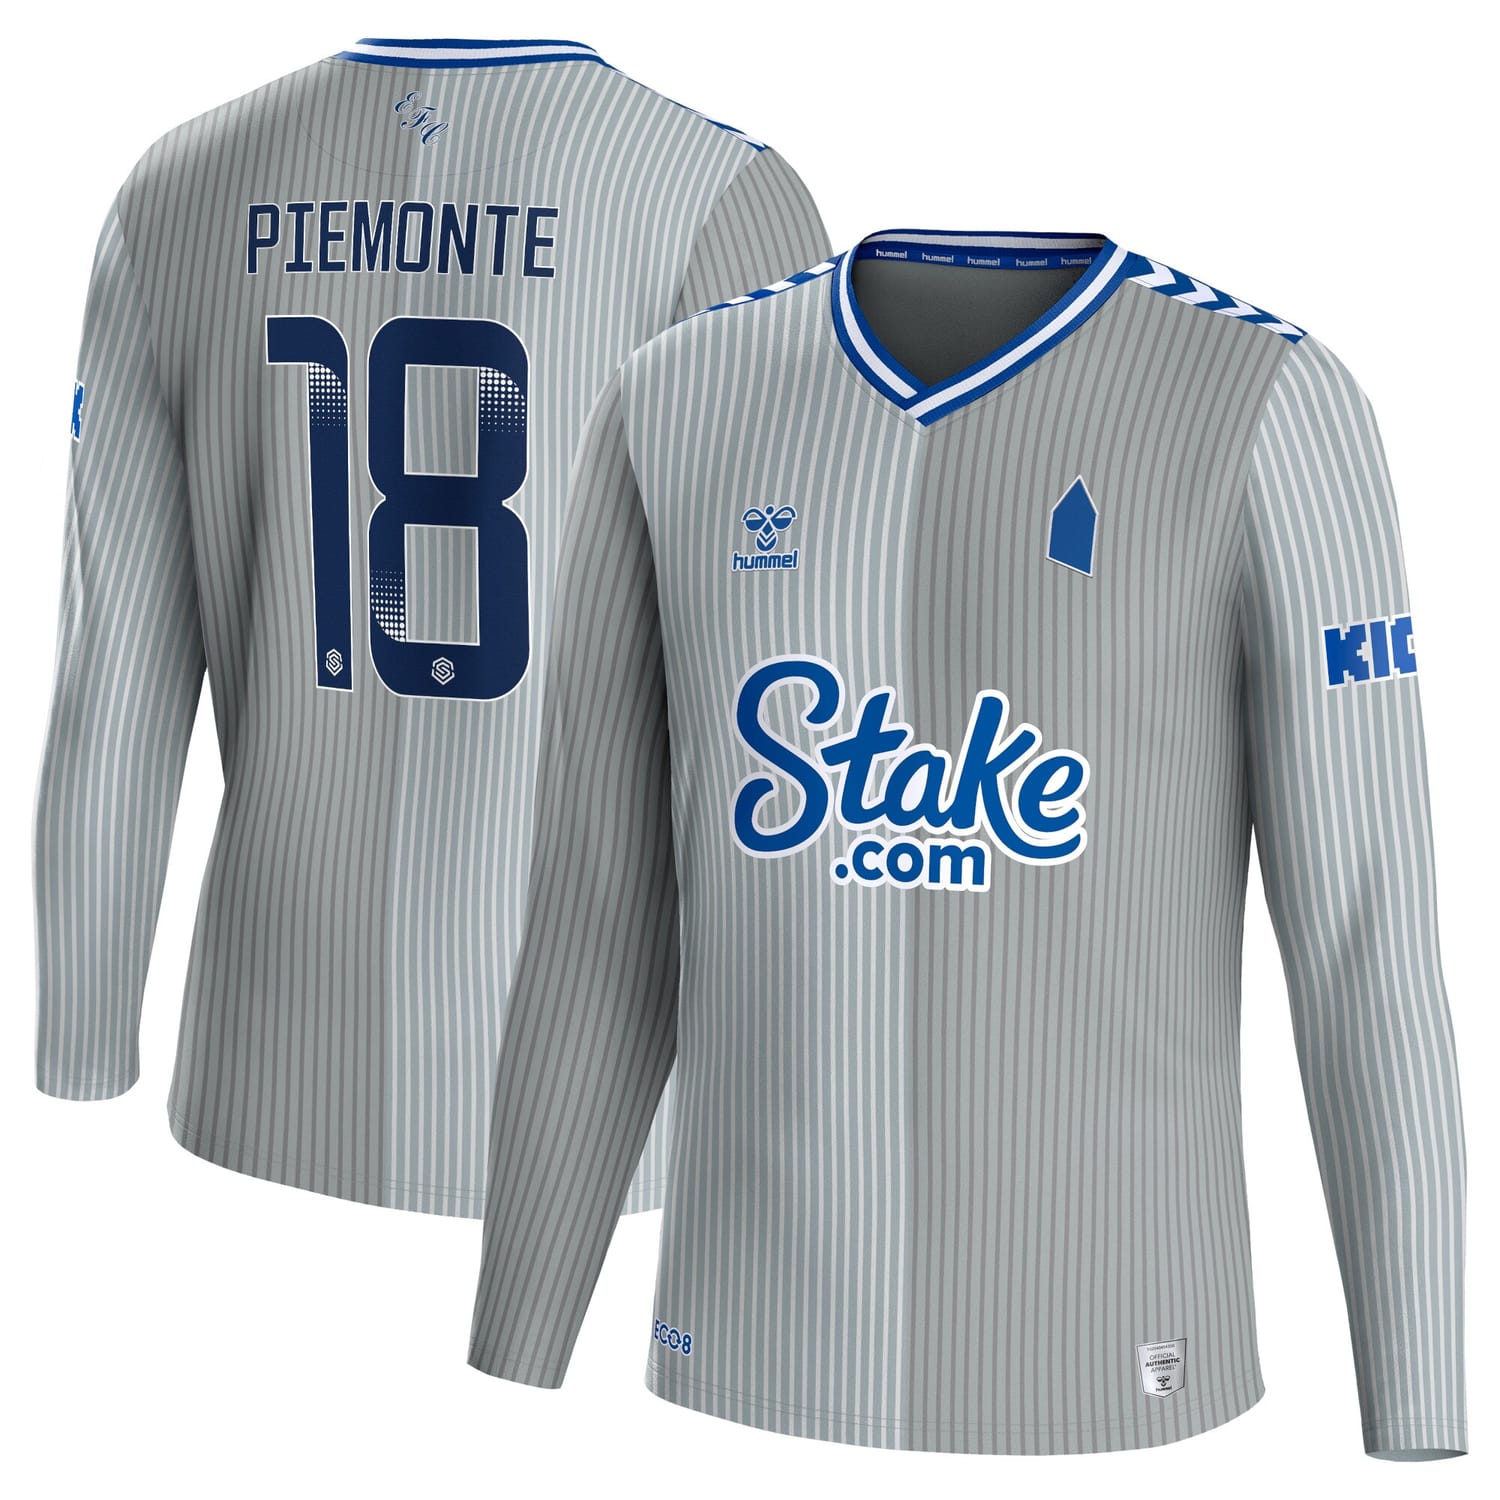 Premier League Everton Third WSL Jersey Shirt Long Sleeve 2023-24 player Martina Piemonte 18 printing for Men